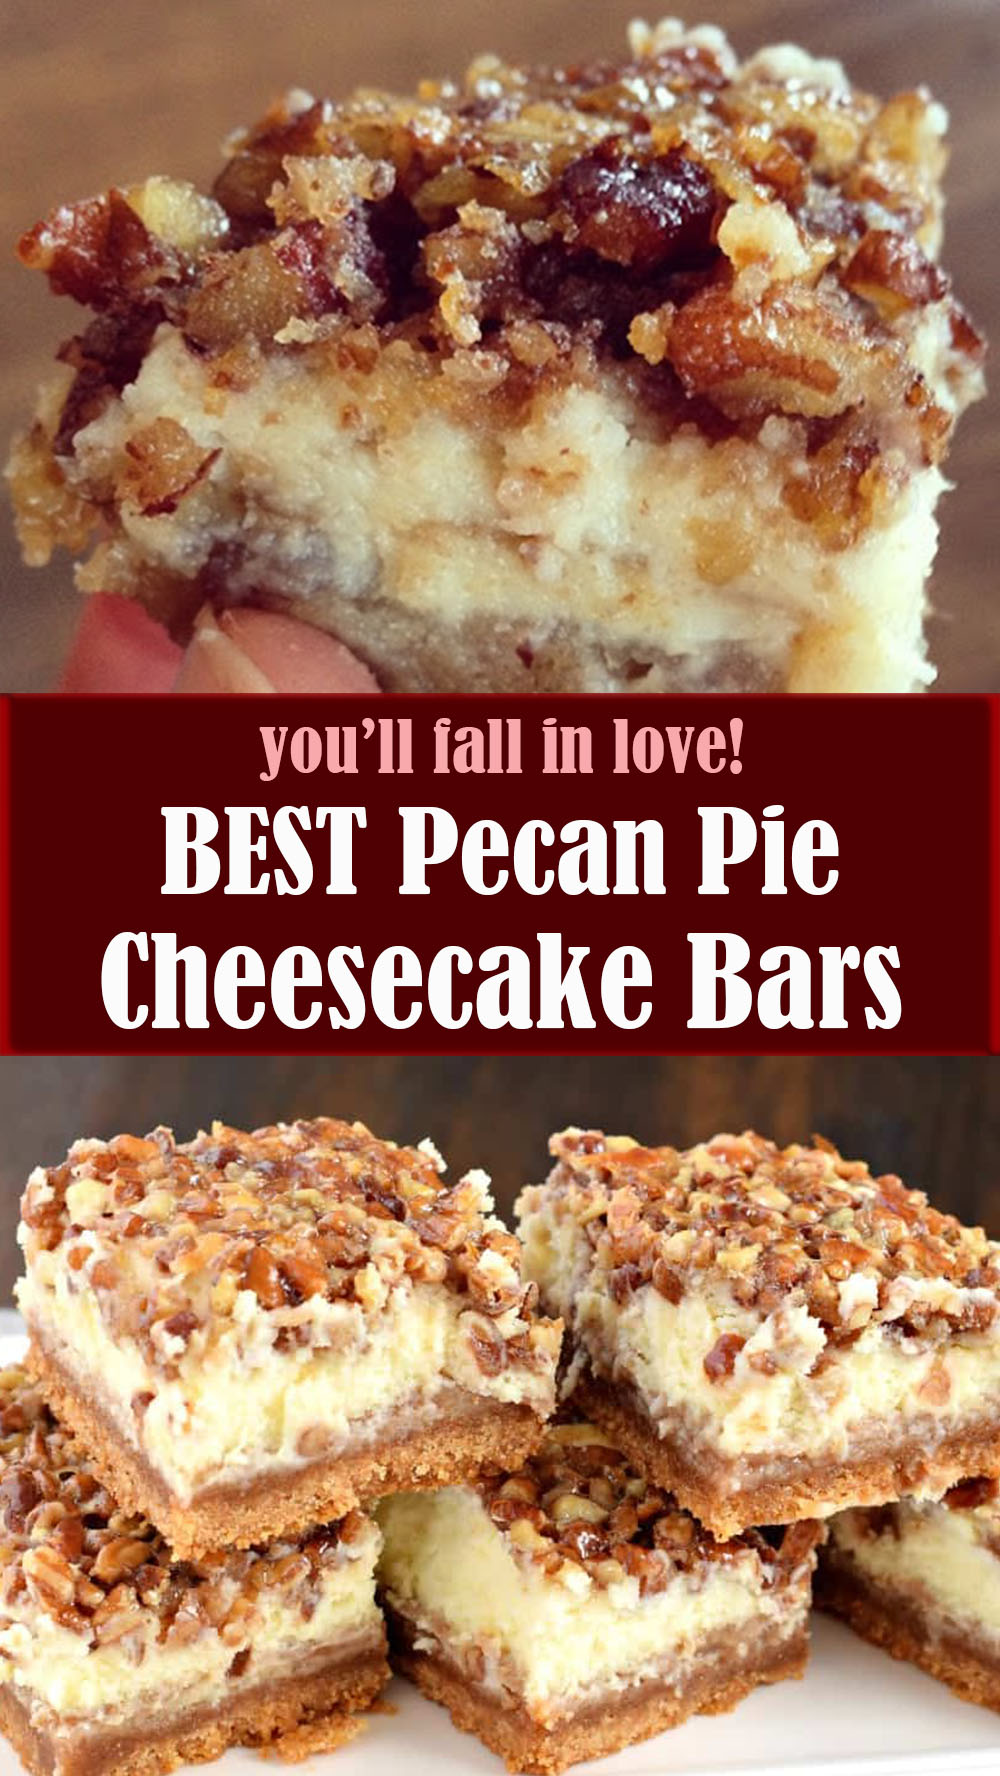 BEST Pecan Pie Cheesecake Bars